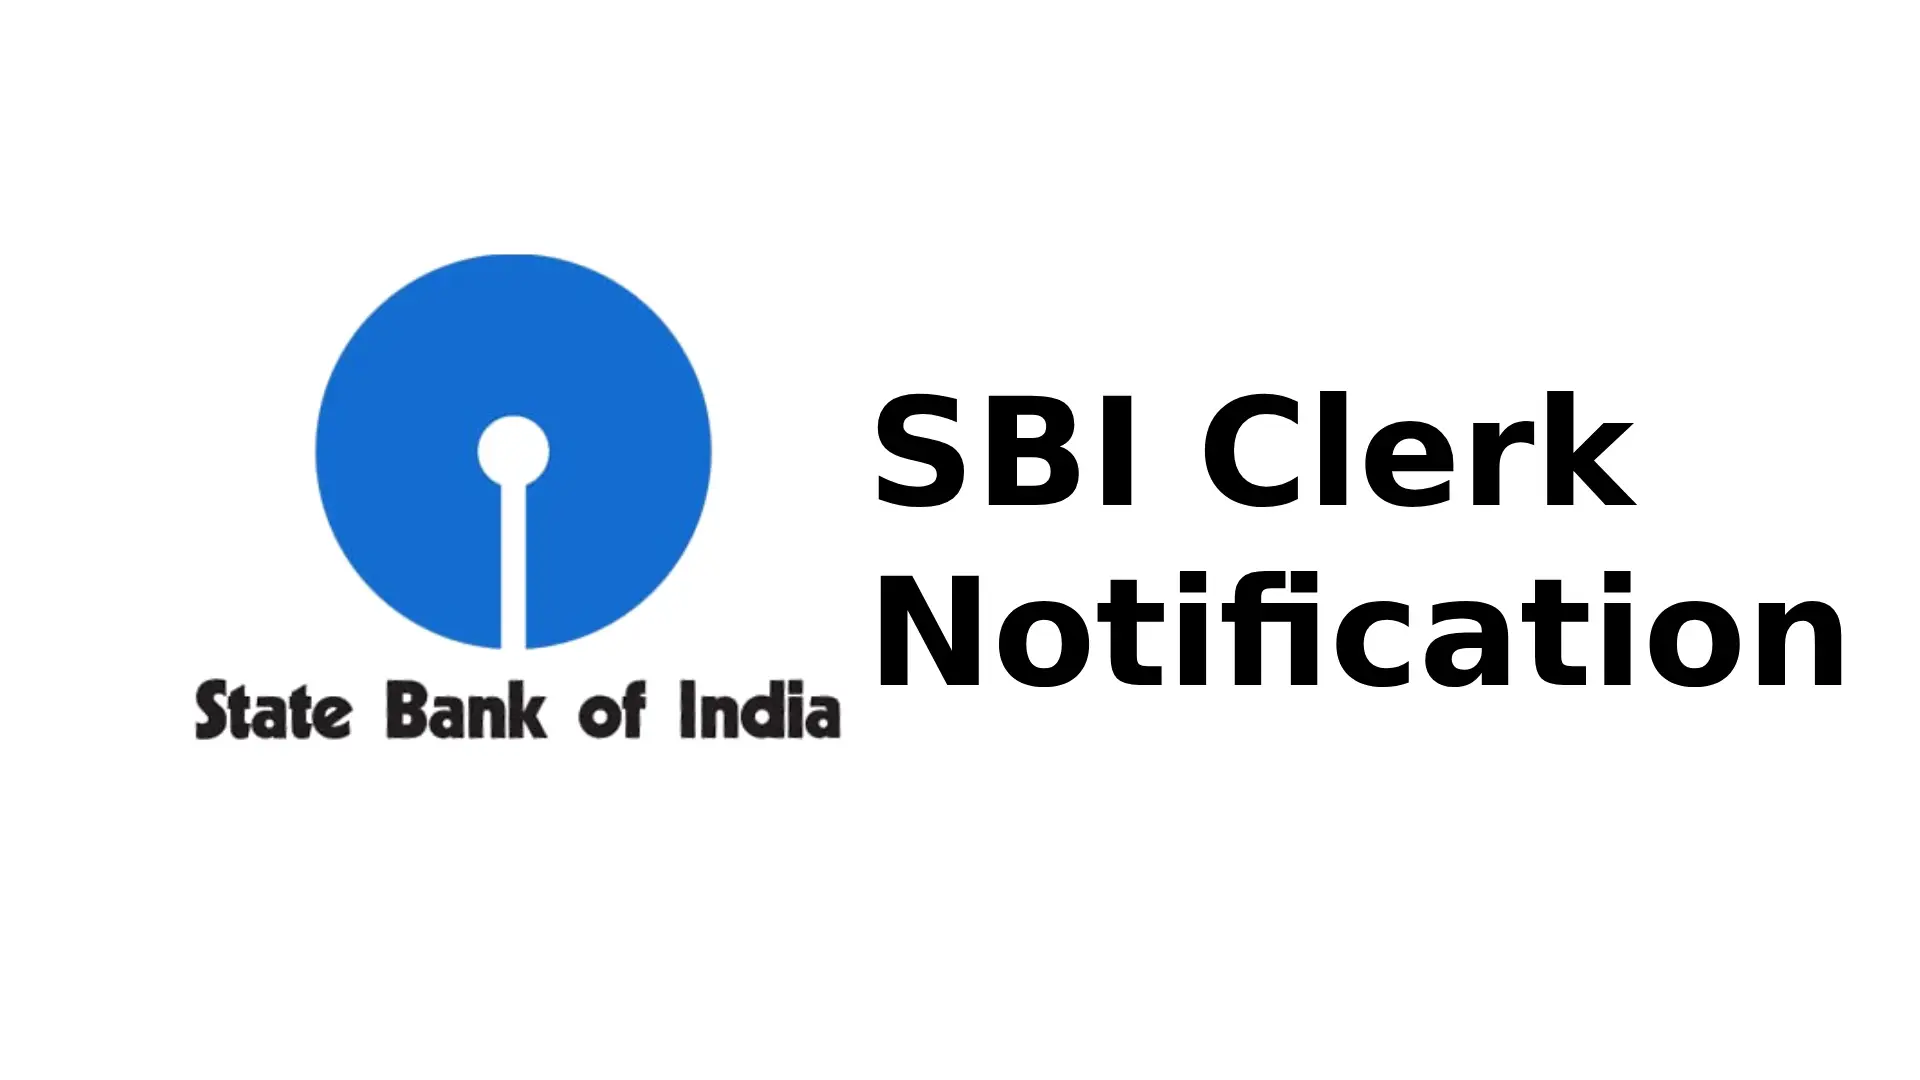 SBI Clerk Notification